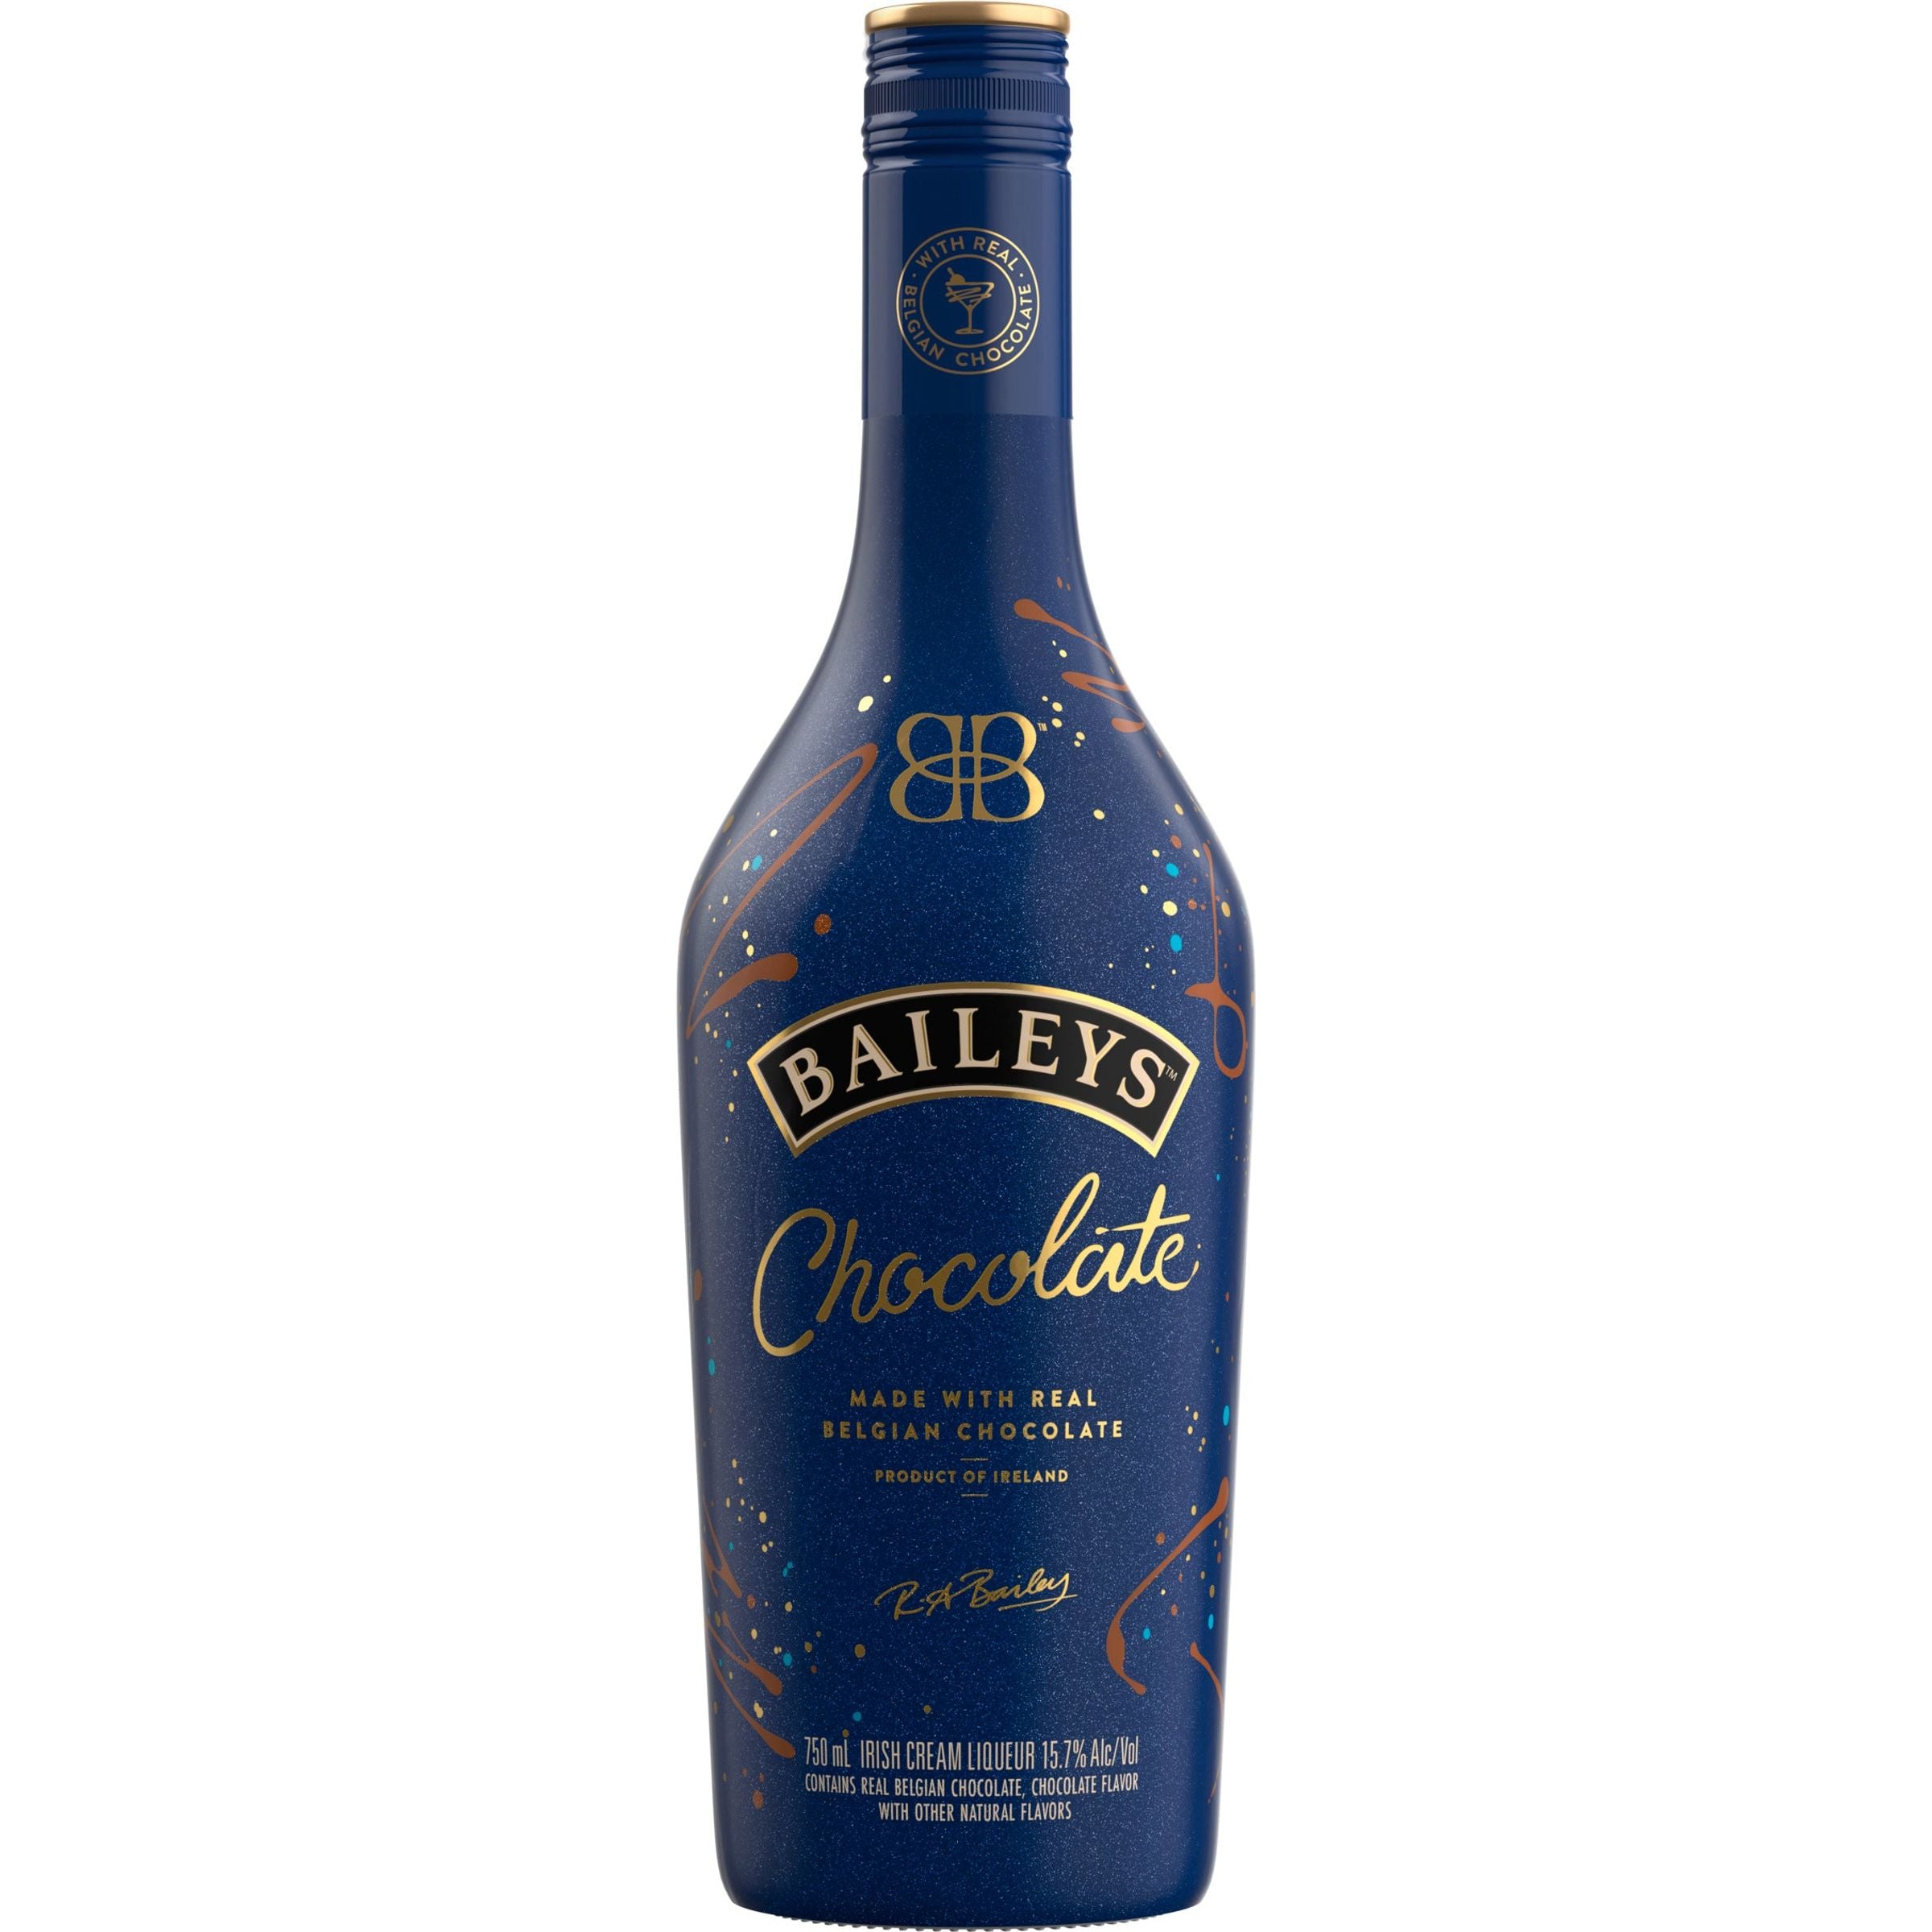 Baileys Colada Irish Cream Liqueur 750mL – Crown Wine and Spirits